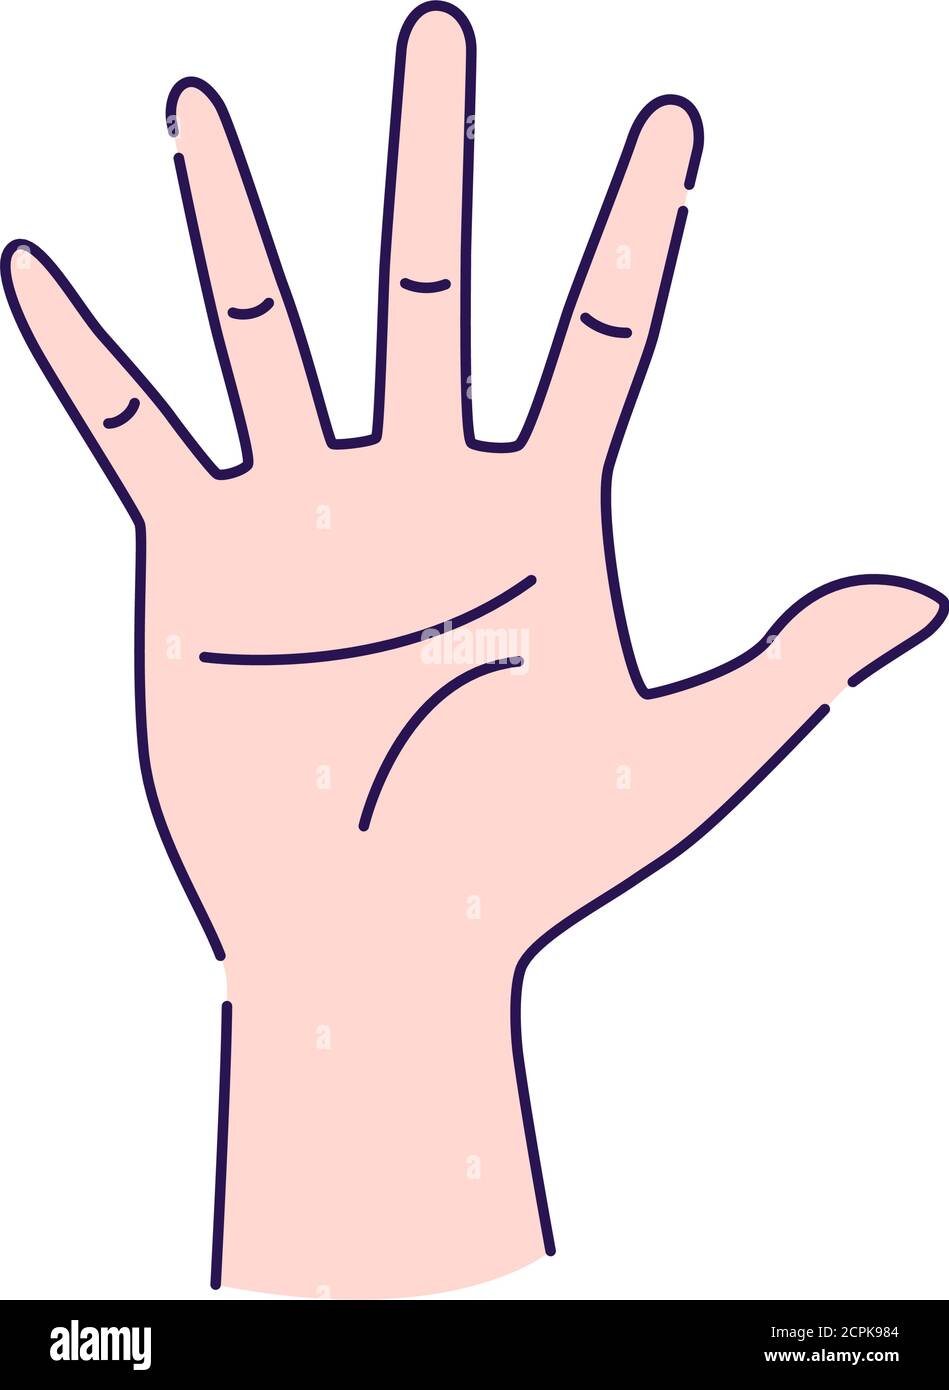 Five fingers gesture line color icon. Make fingers up gesture